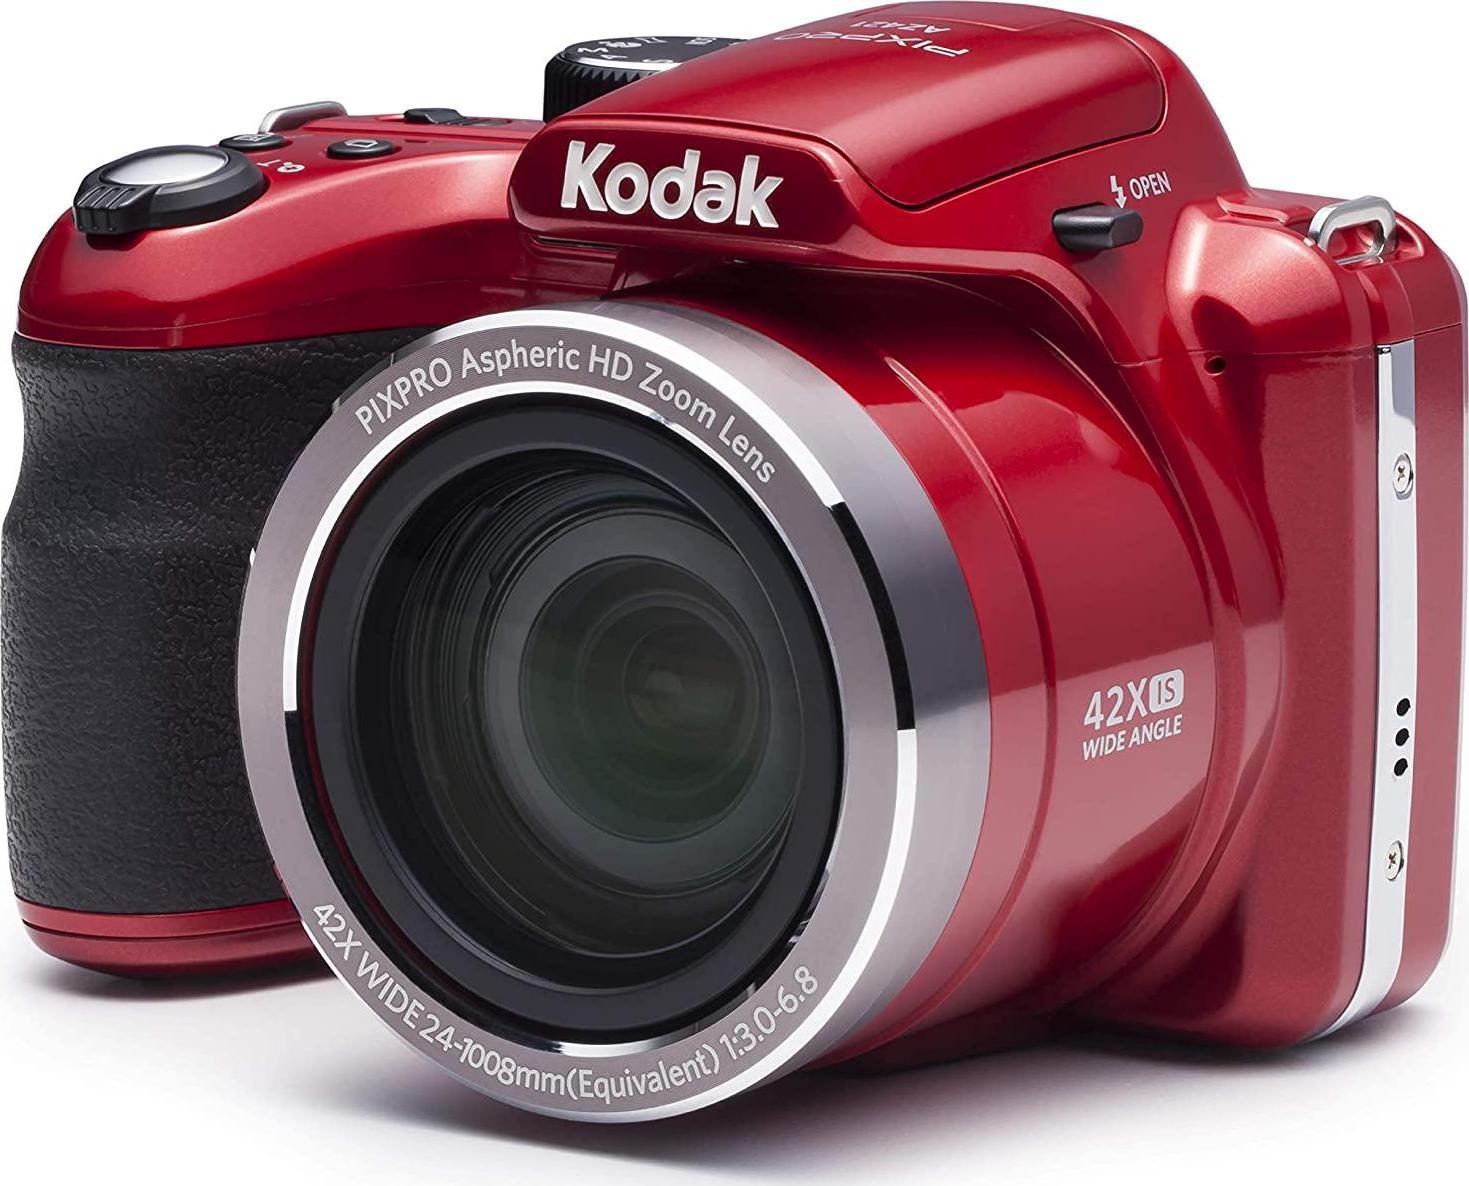 Kodak, Kodak PIXPRO Astro Zoom AZ421-RD 16MP Digital Camera with 42X Optical Zoom and 3 LCD Screen (Red)